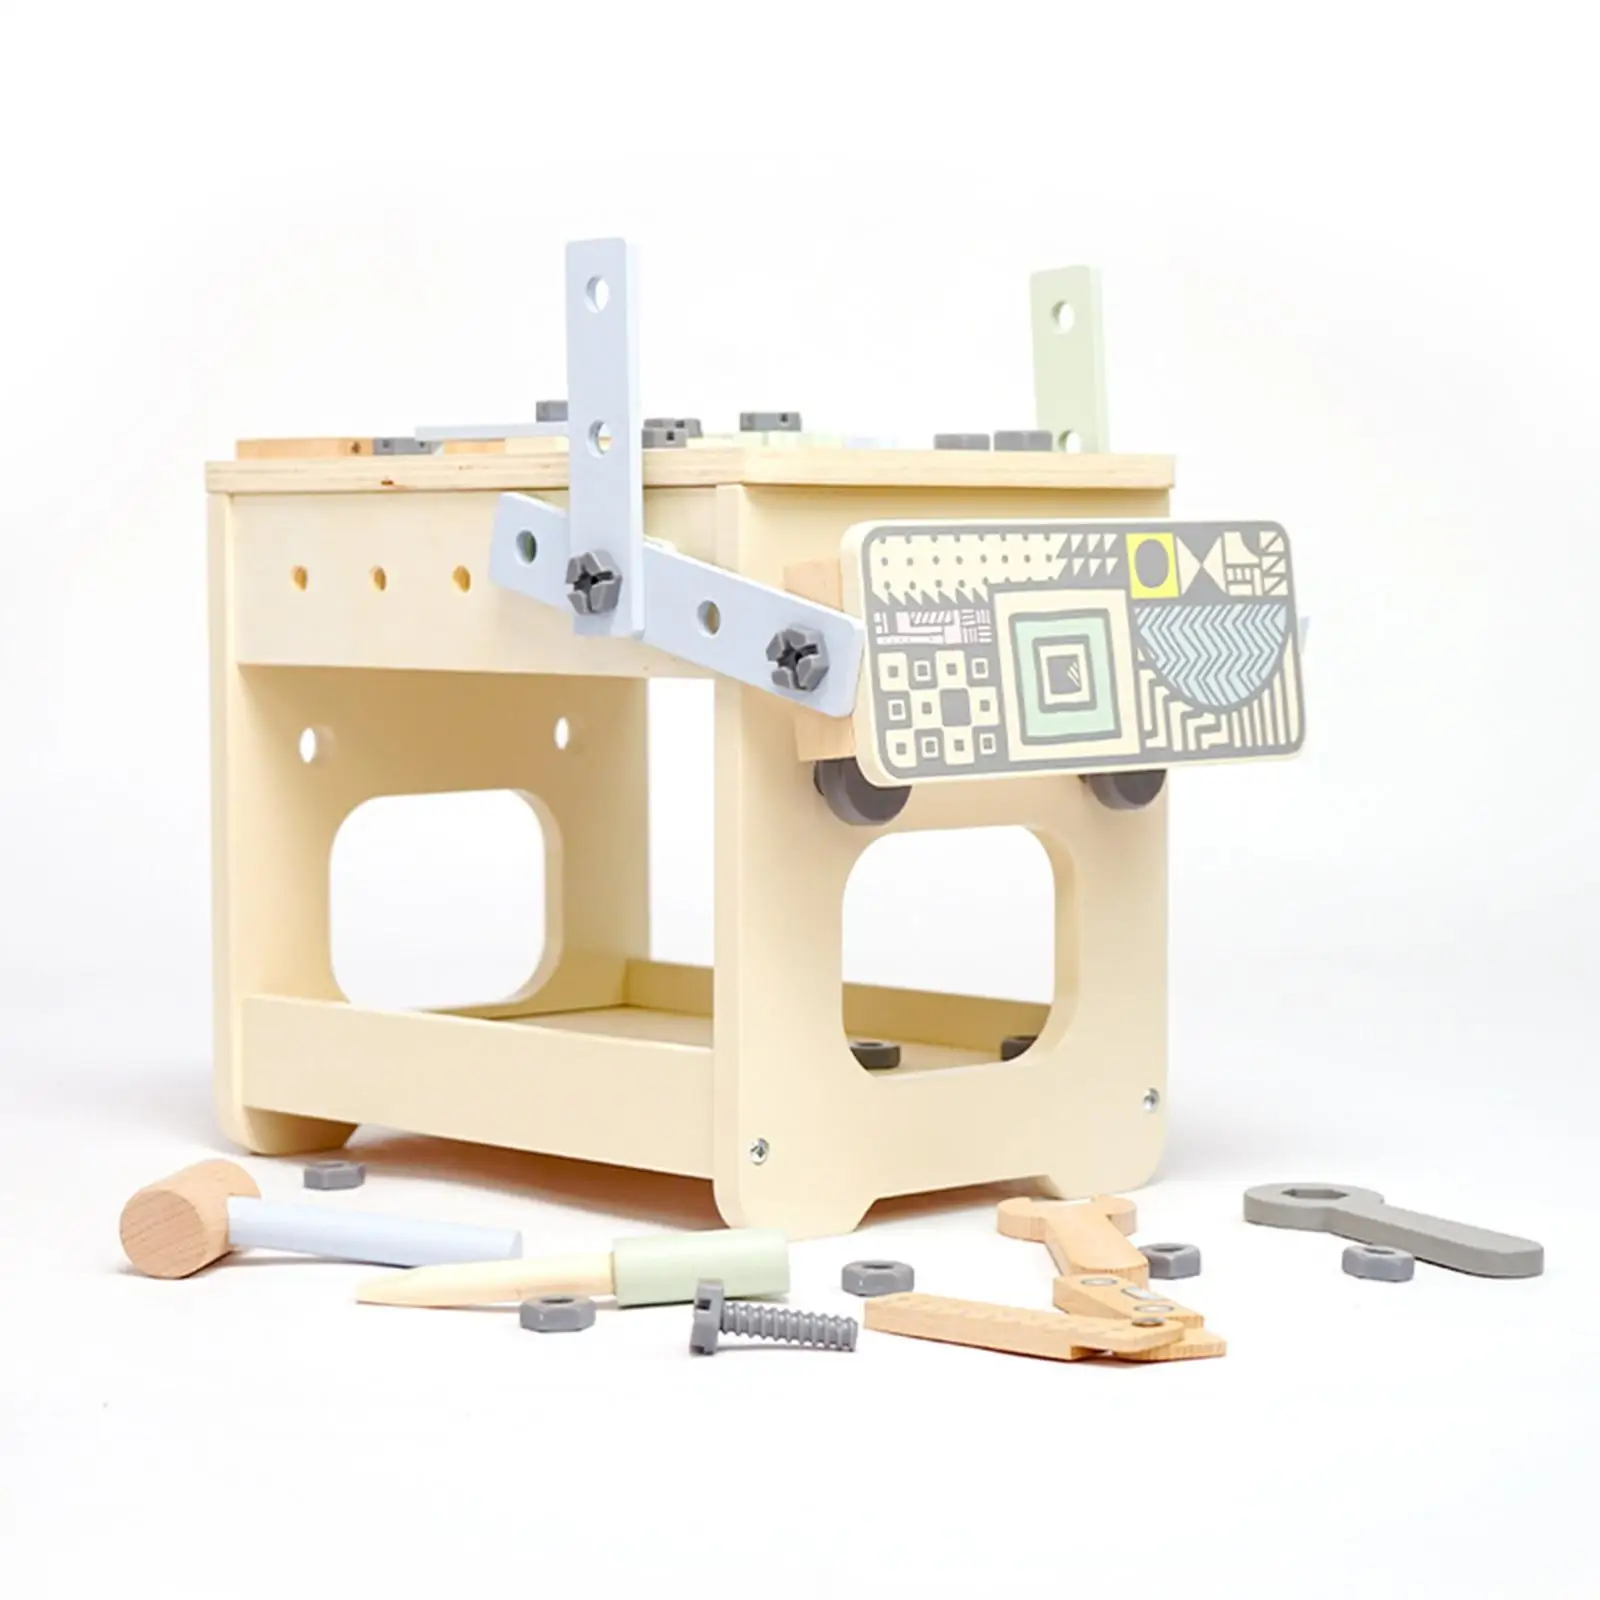 Tool Bench, Wooden Tool Set, Workbench Toy, DIY Construction Toy, for Preschool Activities